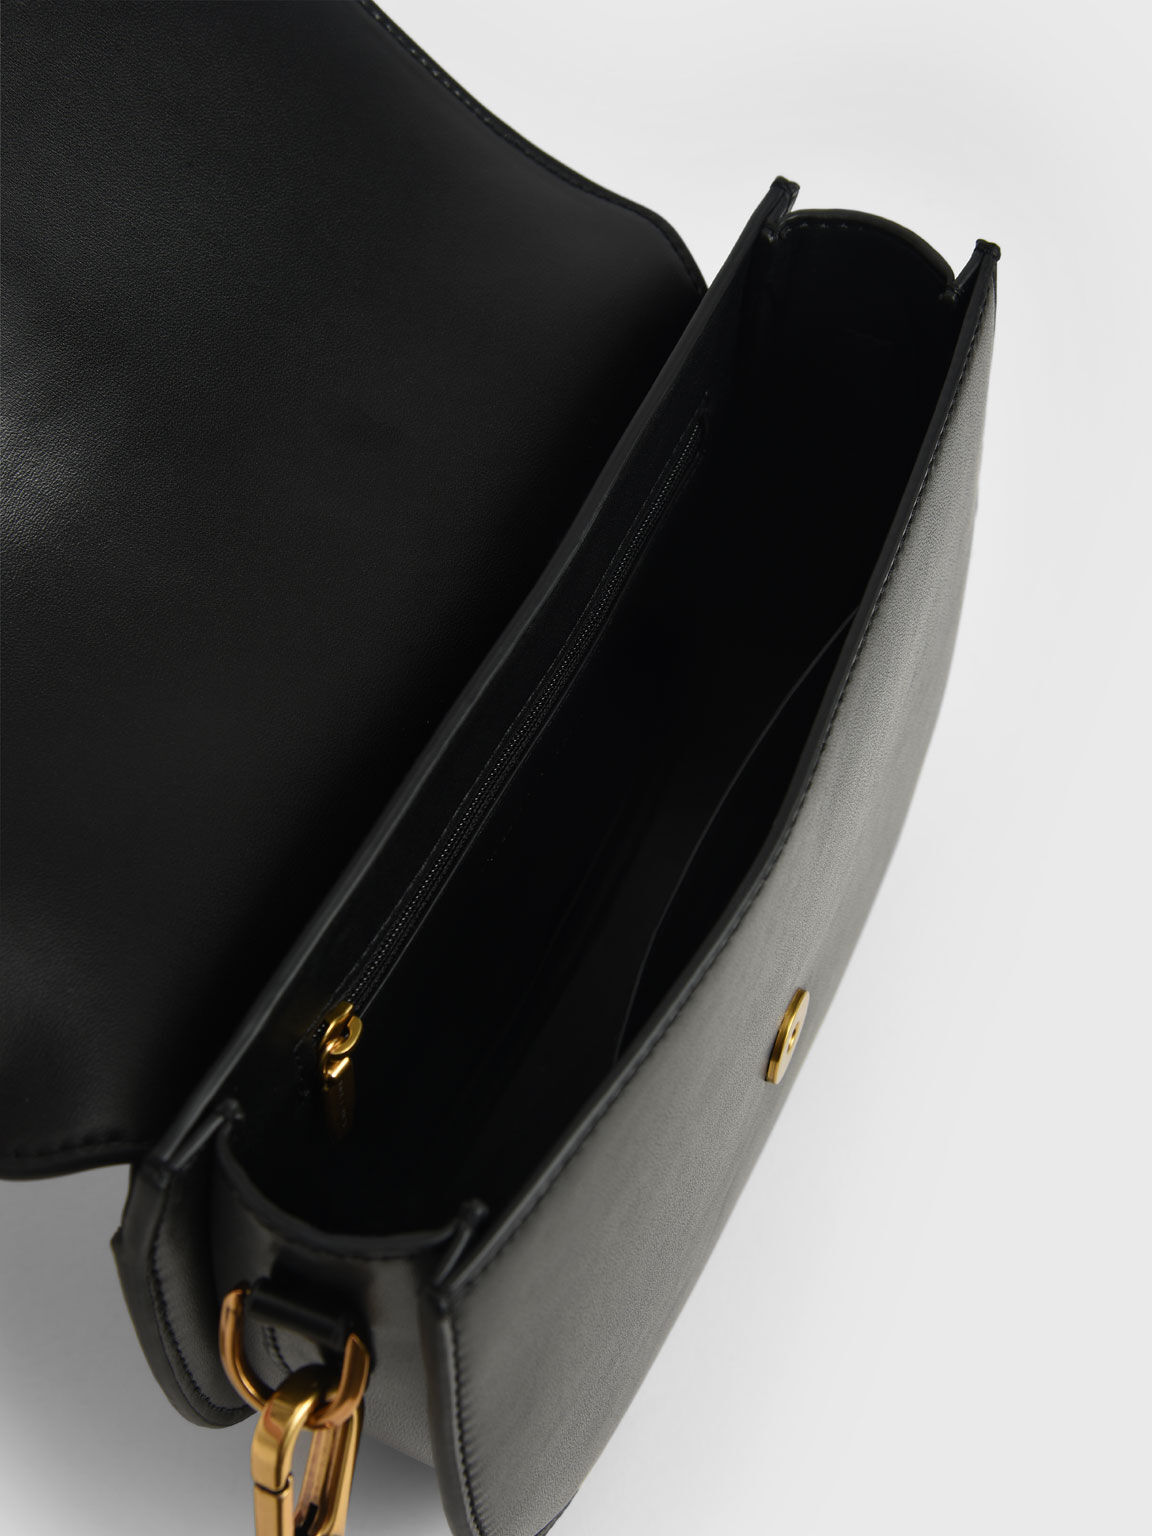 charlesandkeith #gabinesaddlebag #leather #fallpurses #fyp #whatfitsi, Gabine Leather Saddle Bag